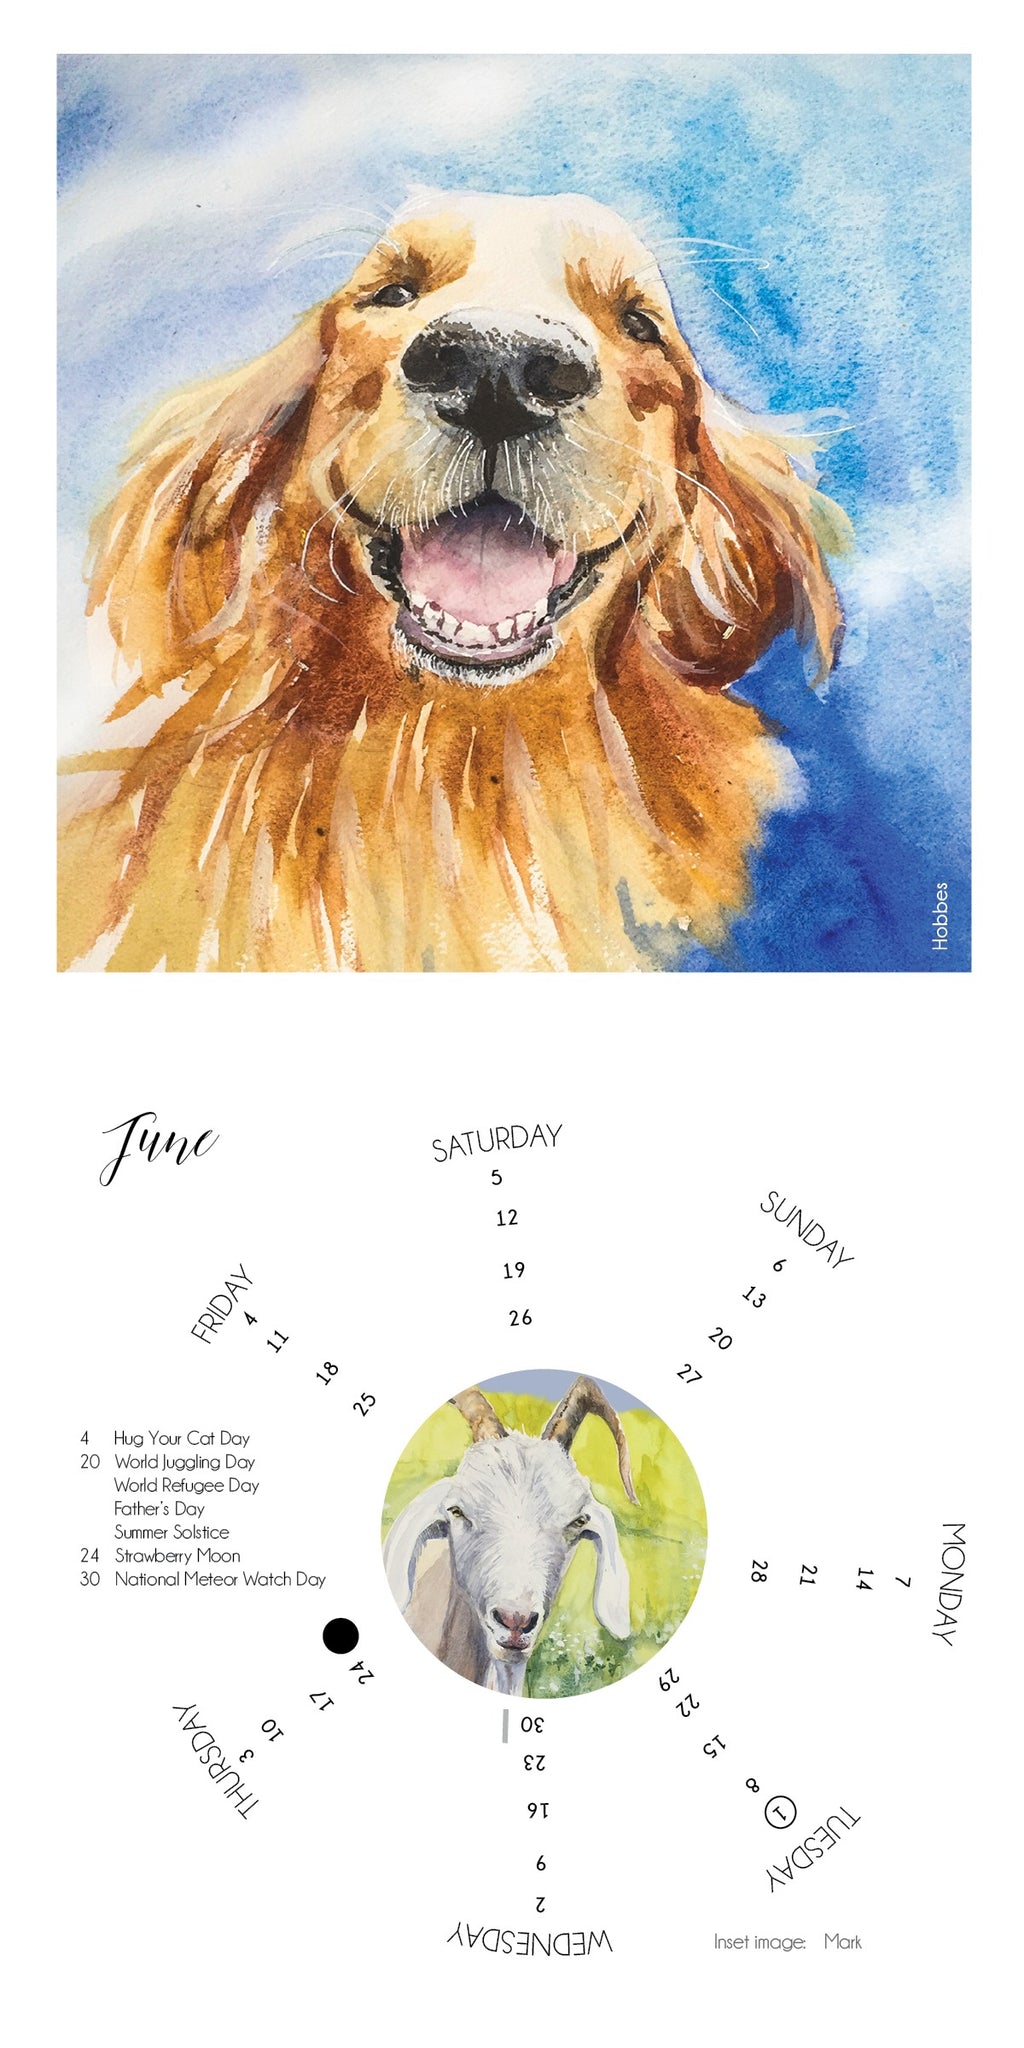 2021 Celebrating Animals Calendar with 24 Paintings by Miranda Loud